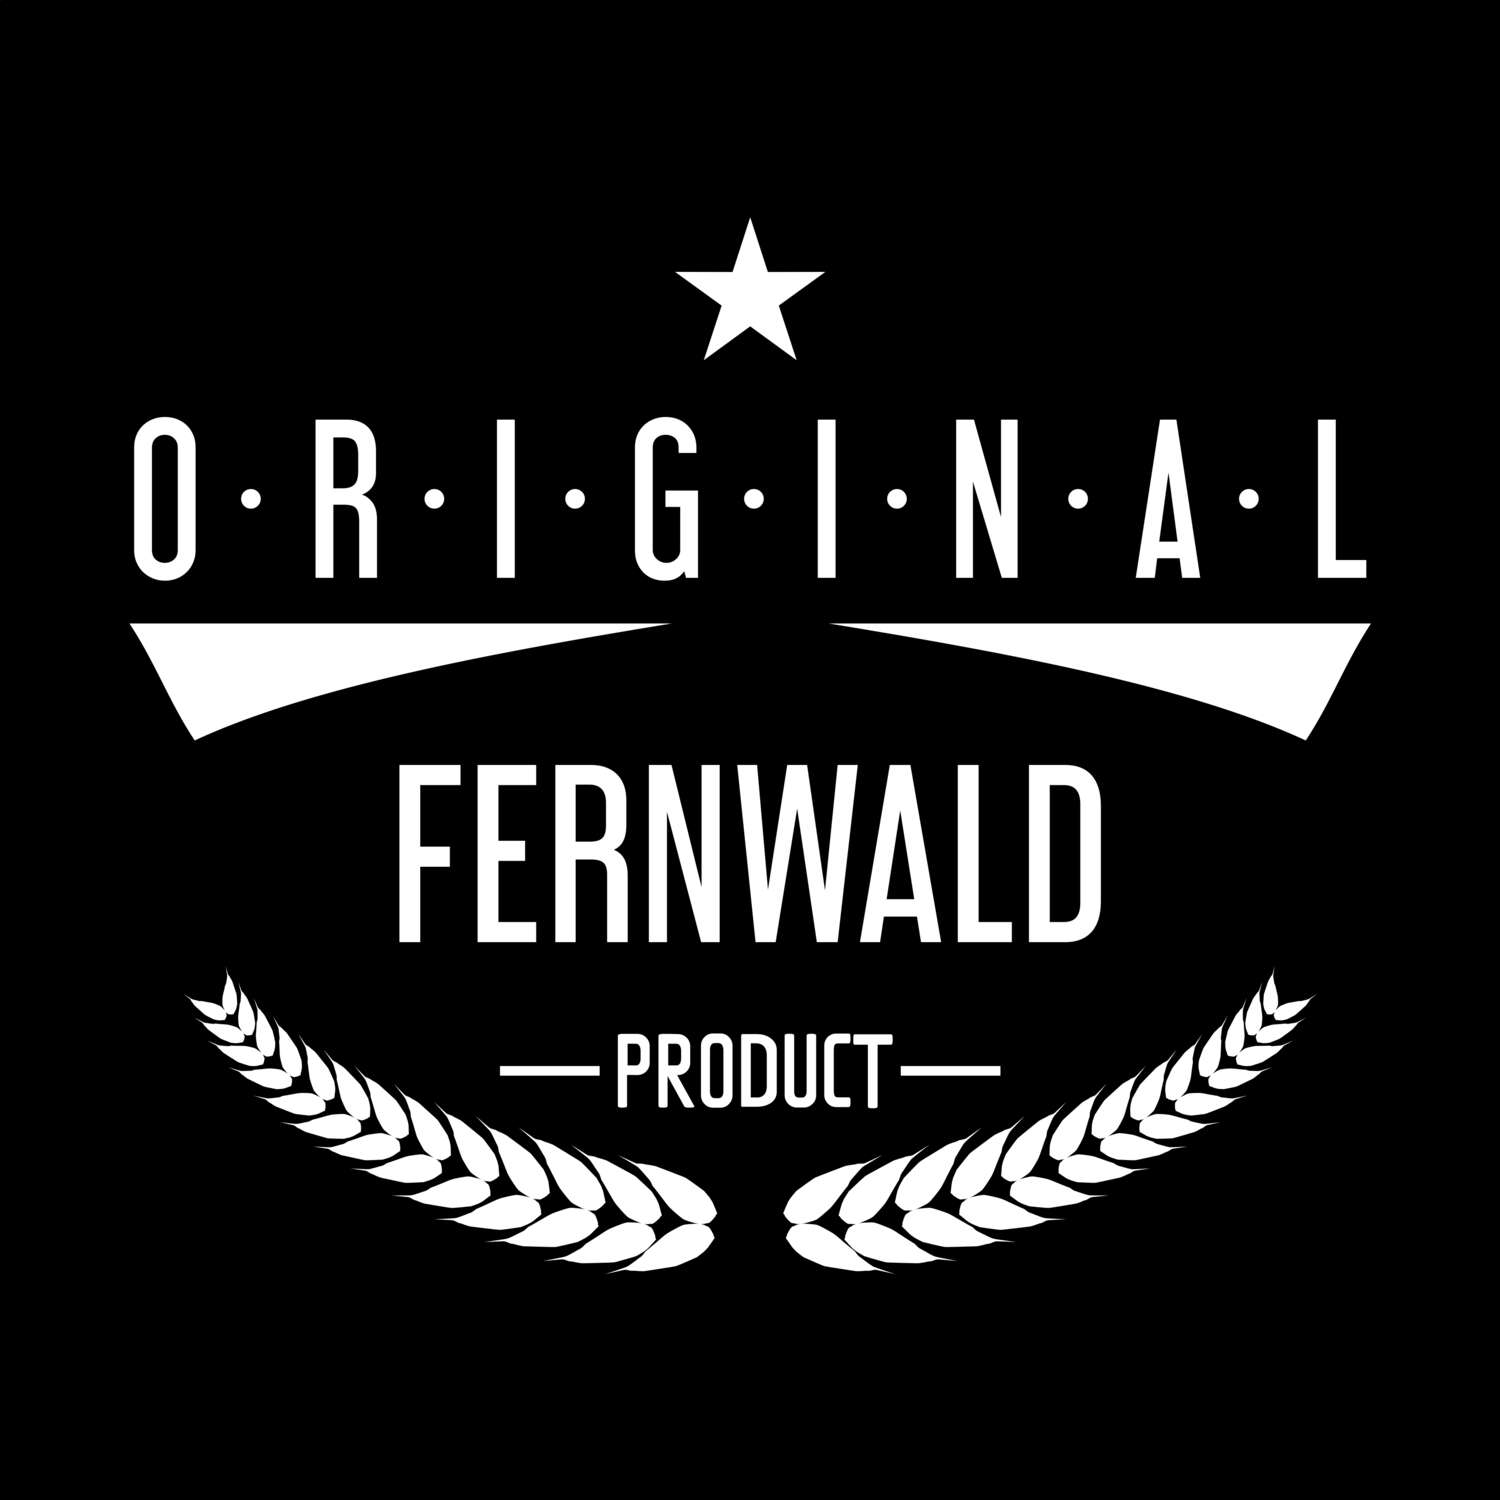 Fernwald T-Shirt »Original Product«